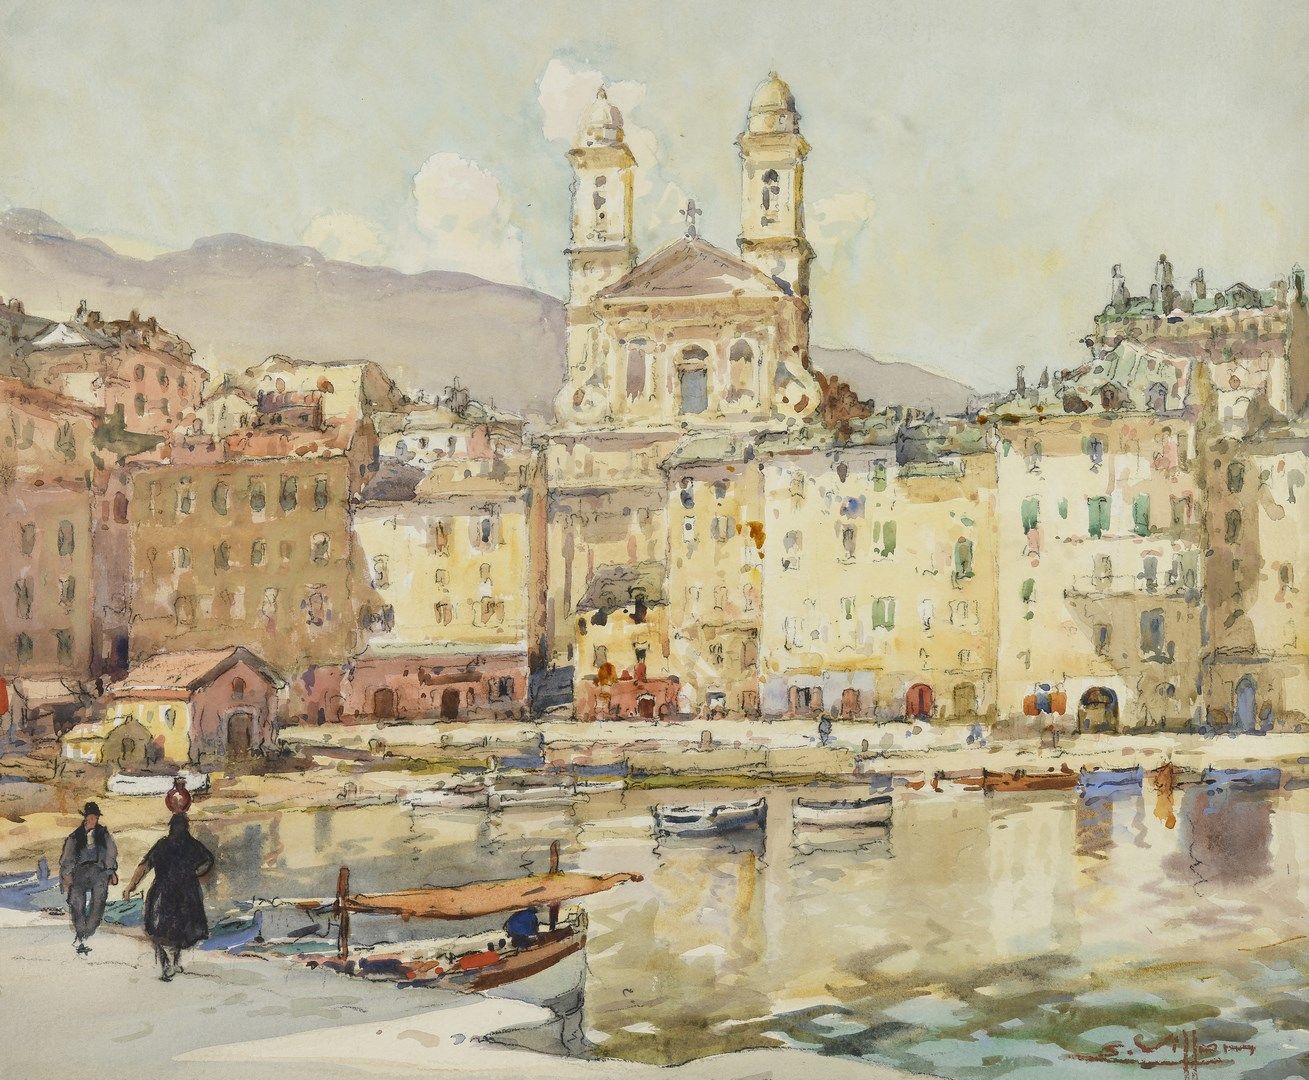 Null 维龙-欧仁，1879-1951年

巴斯蒂亚港，背景是圣让教堂，科西嘉岛，1920年

水彩画和水粉画

右下角有签名，在法国水彩画家协会的订阅表上有&hellip;